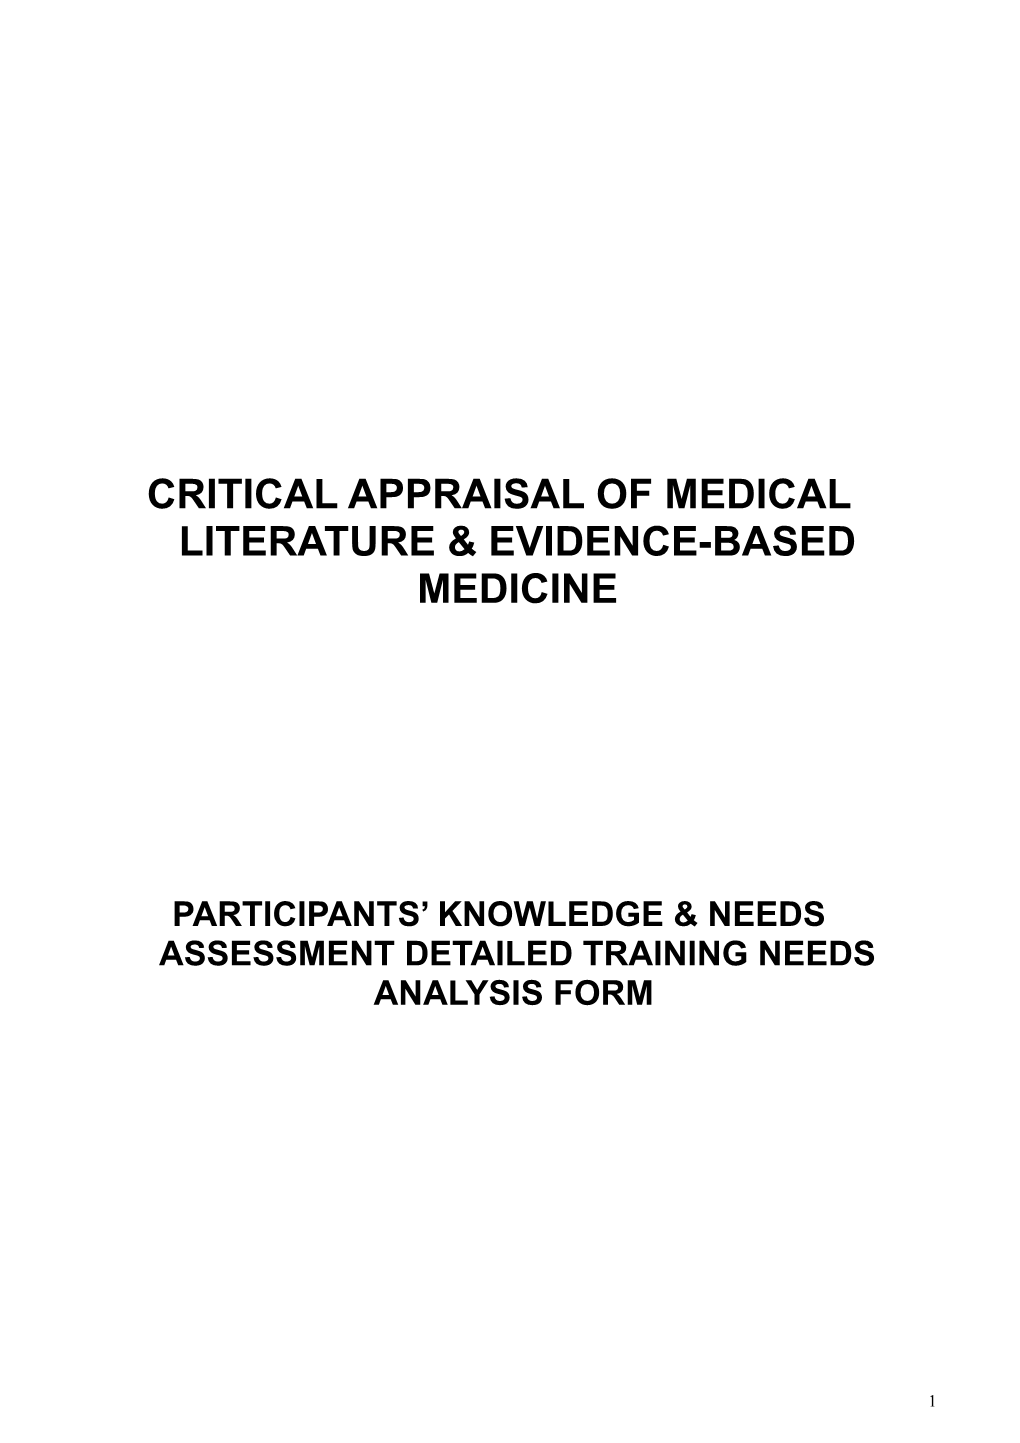 Critical Appraisal of Medical Literature & Evidence-Based Medicine